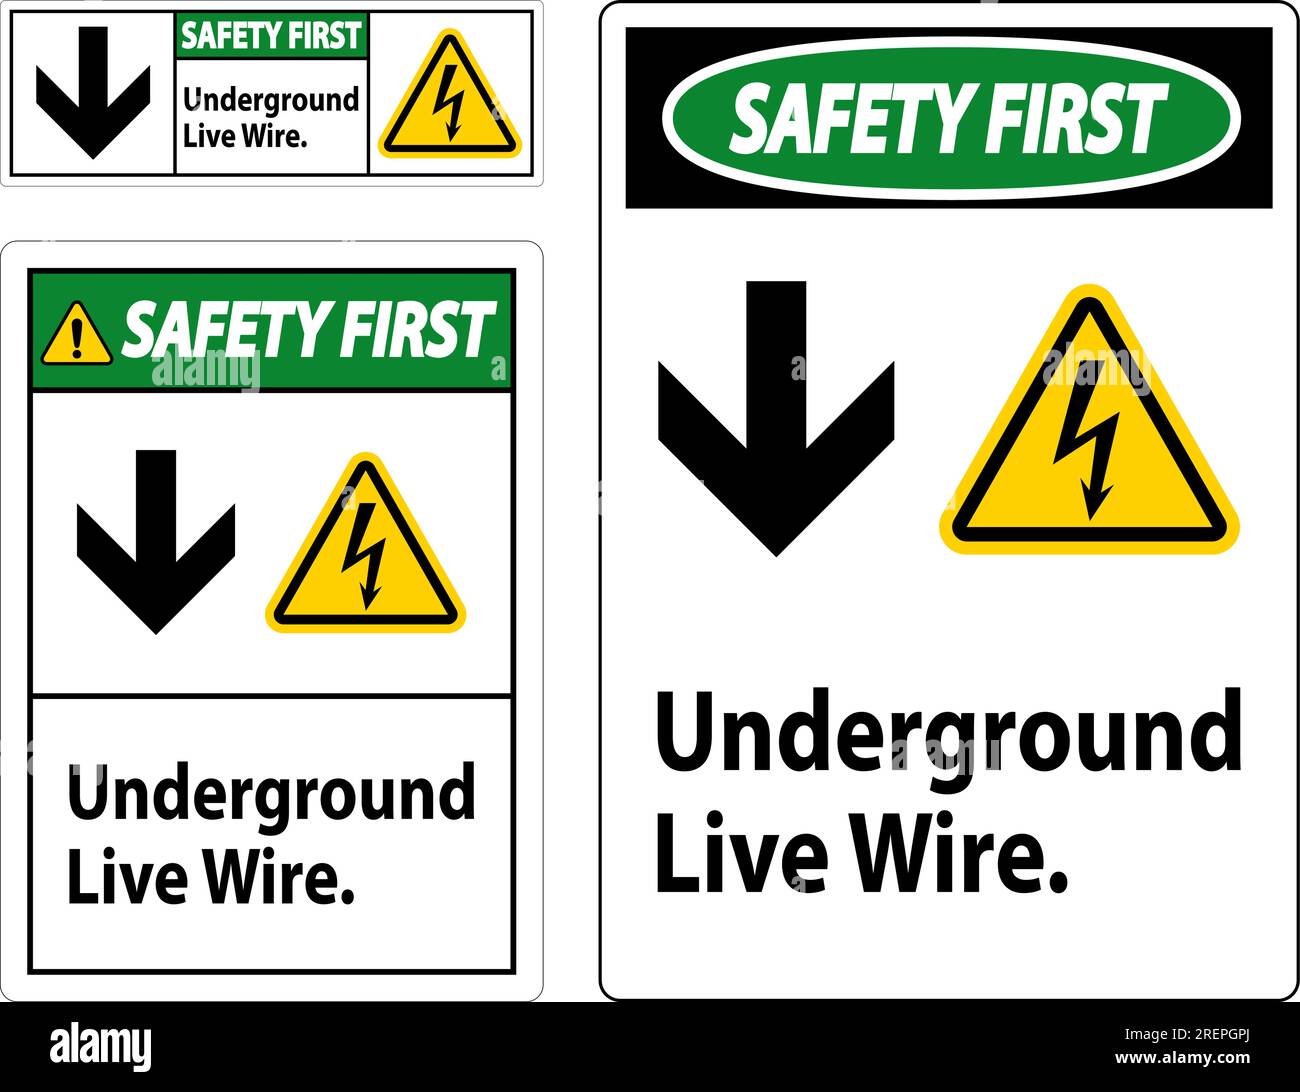 Safety First Sign, Underground Live Wire. Stock Vector